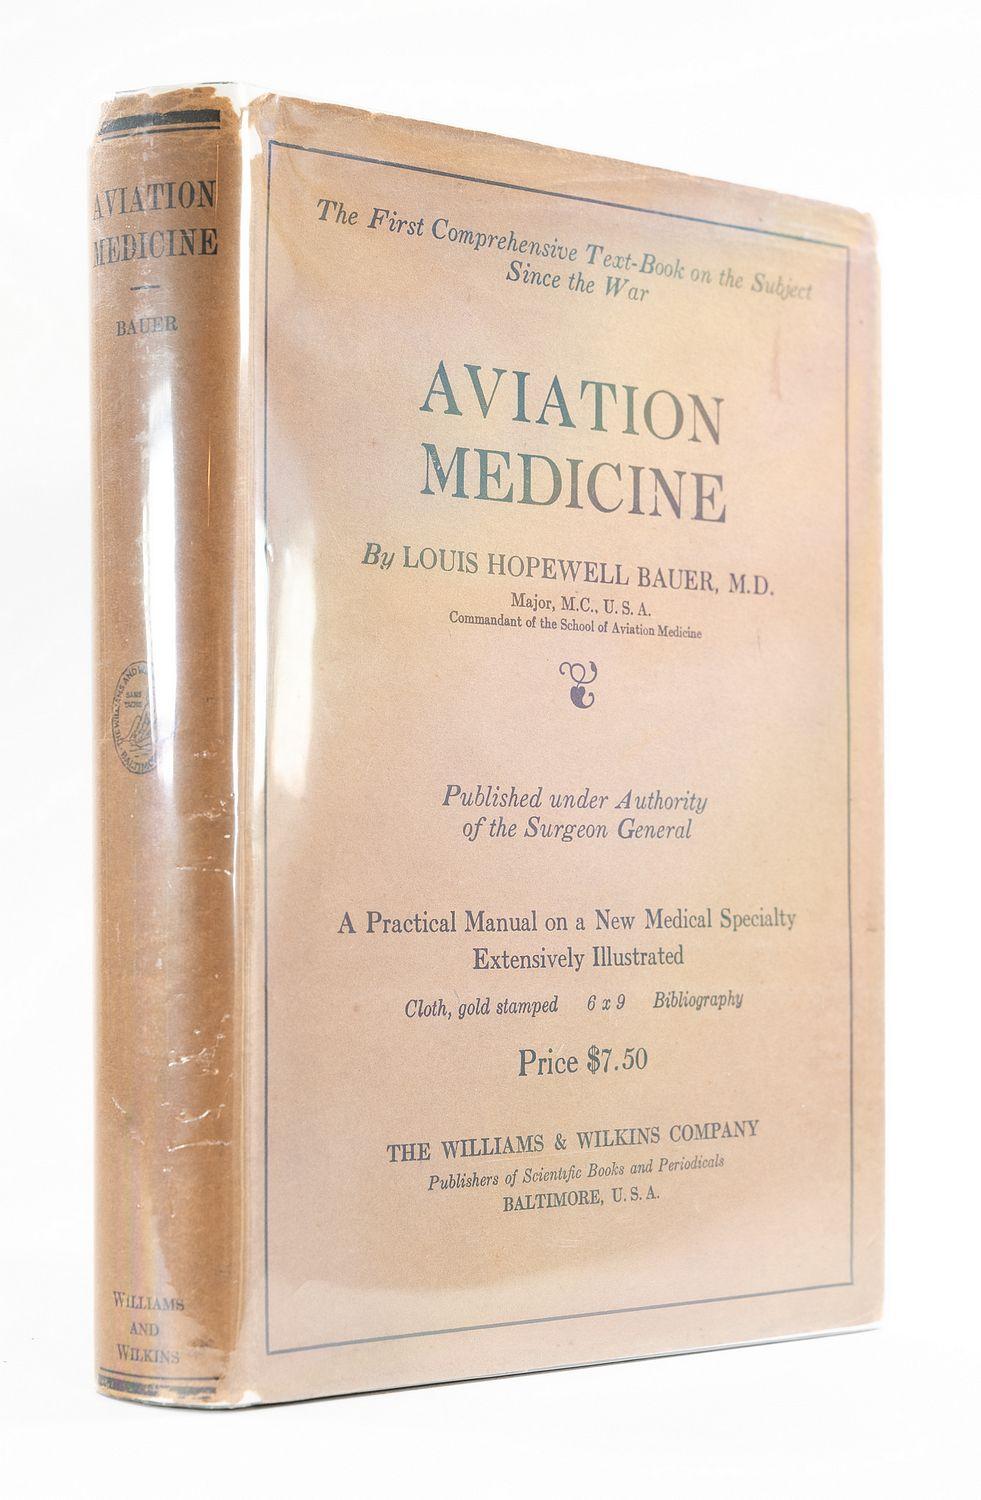 Aviation medicine, third edition